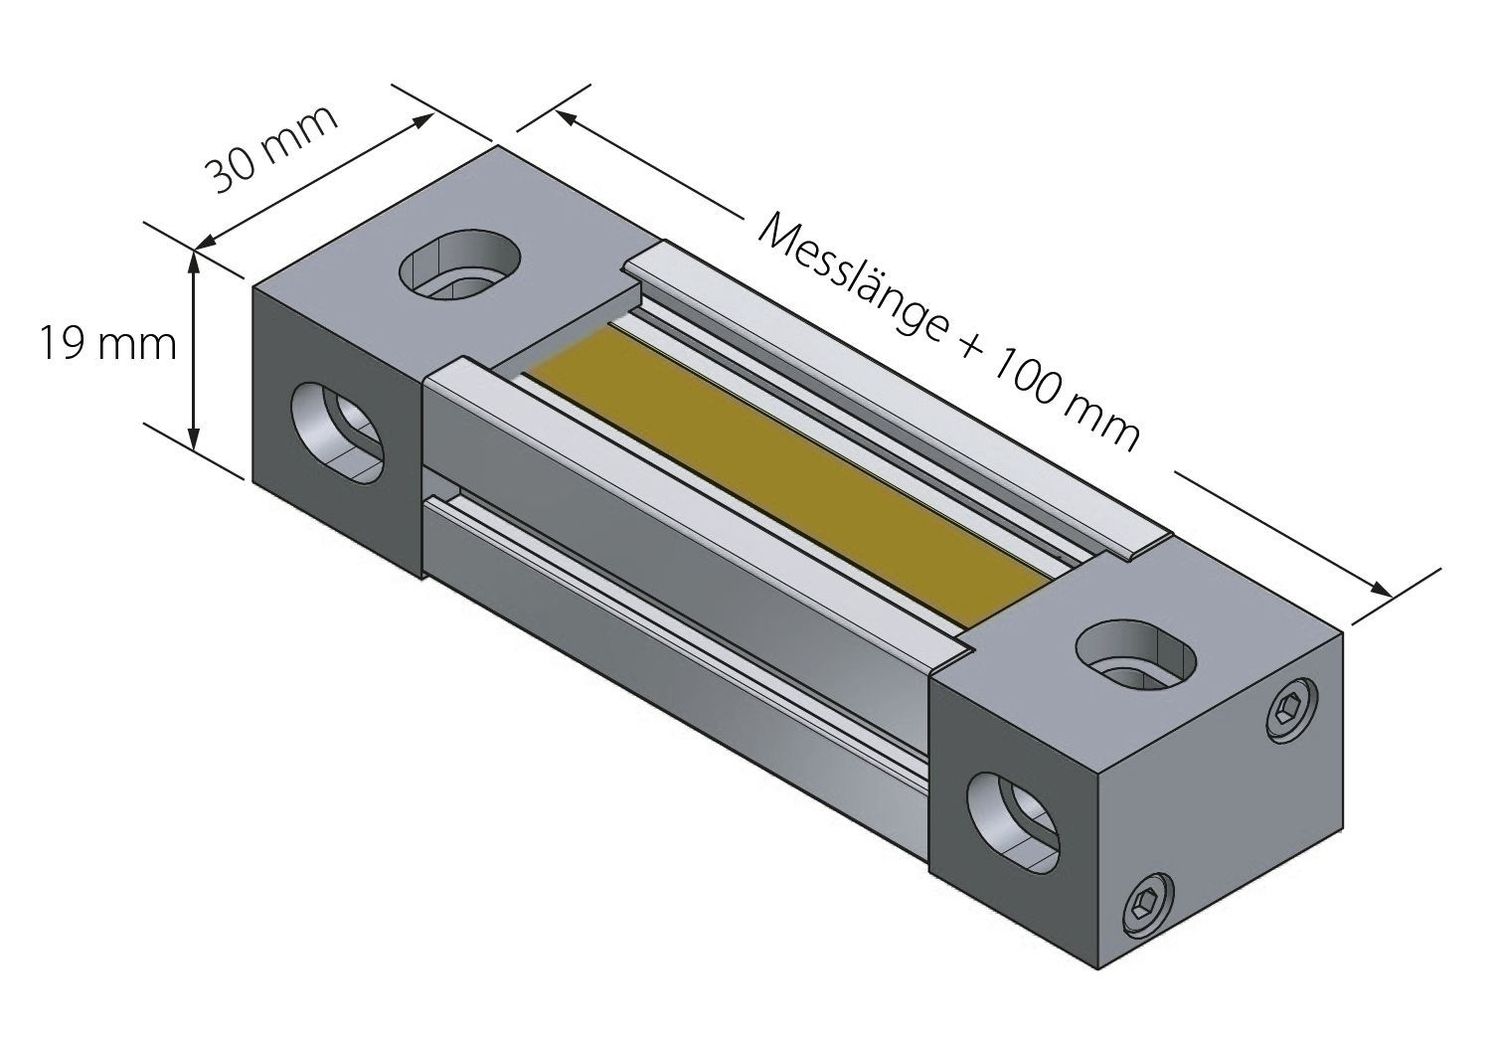 K+C Magnetmaßstab MS10A 1050 mm - 5 µm | Verfahrweg 1070 mm